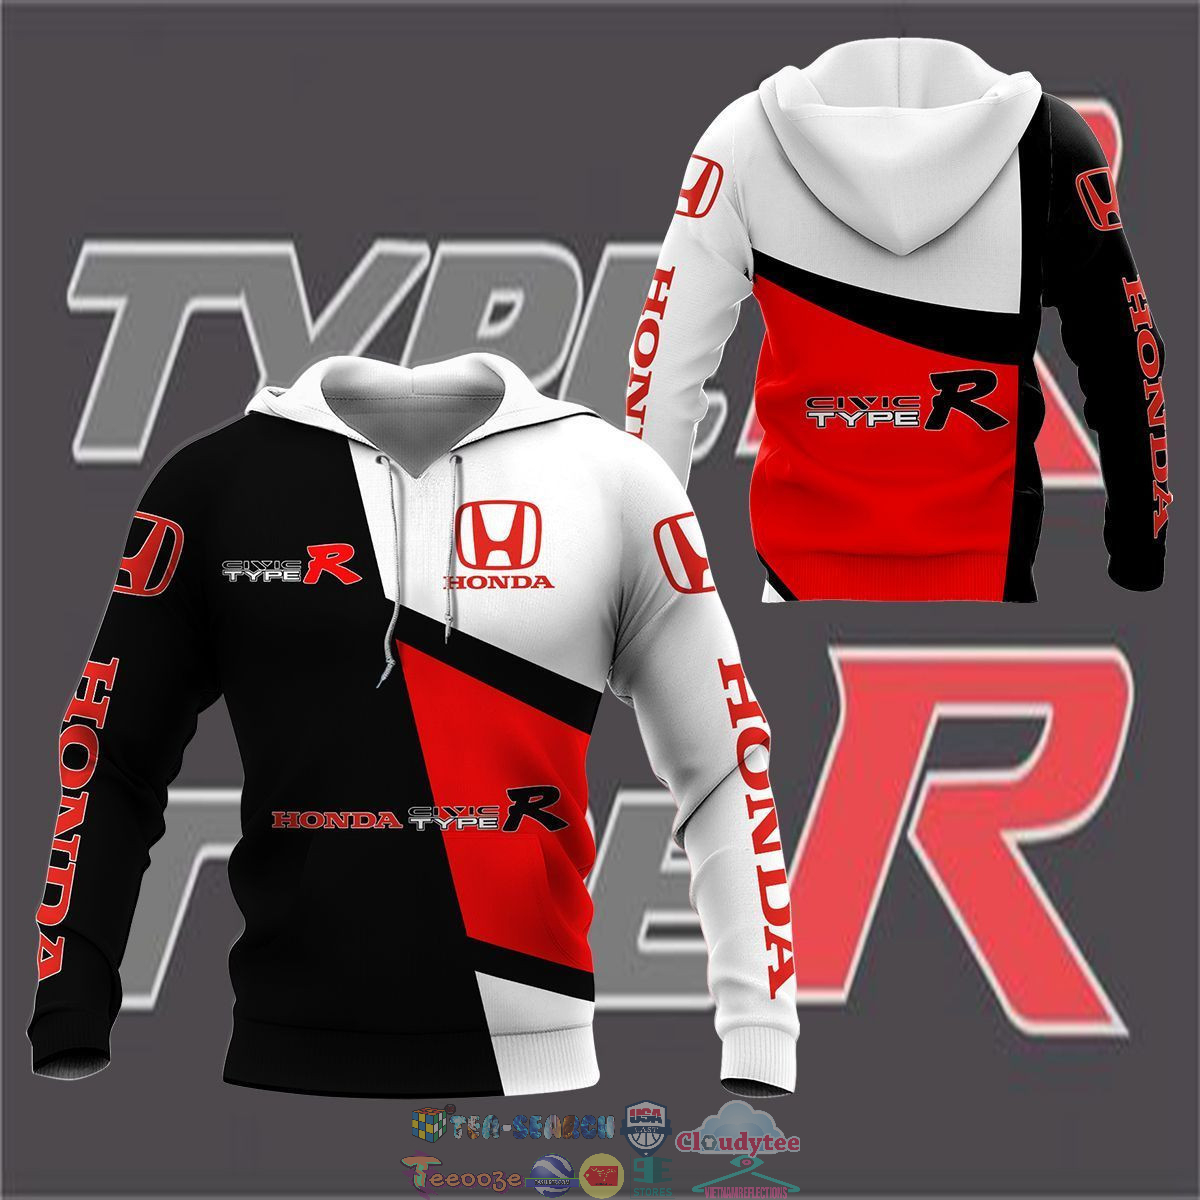 Honda Civic Type R ver 11 3D hoodie and t-shirt